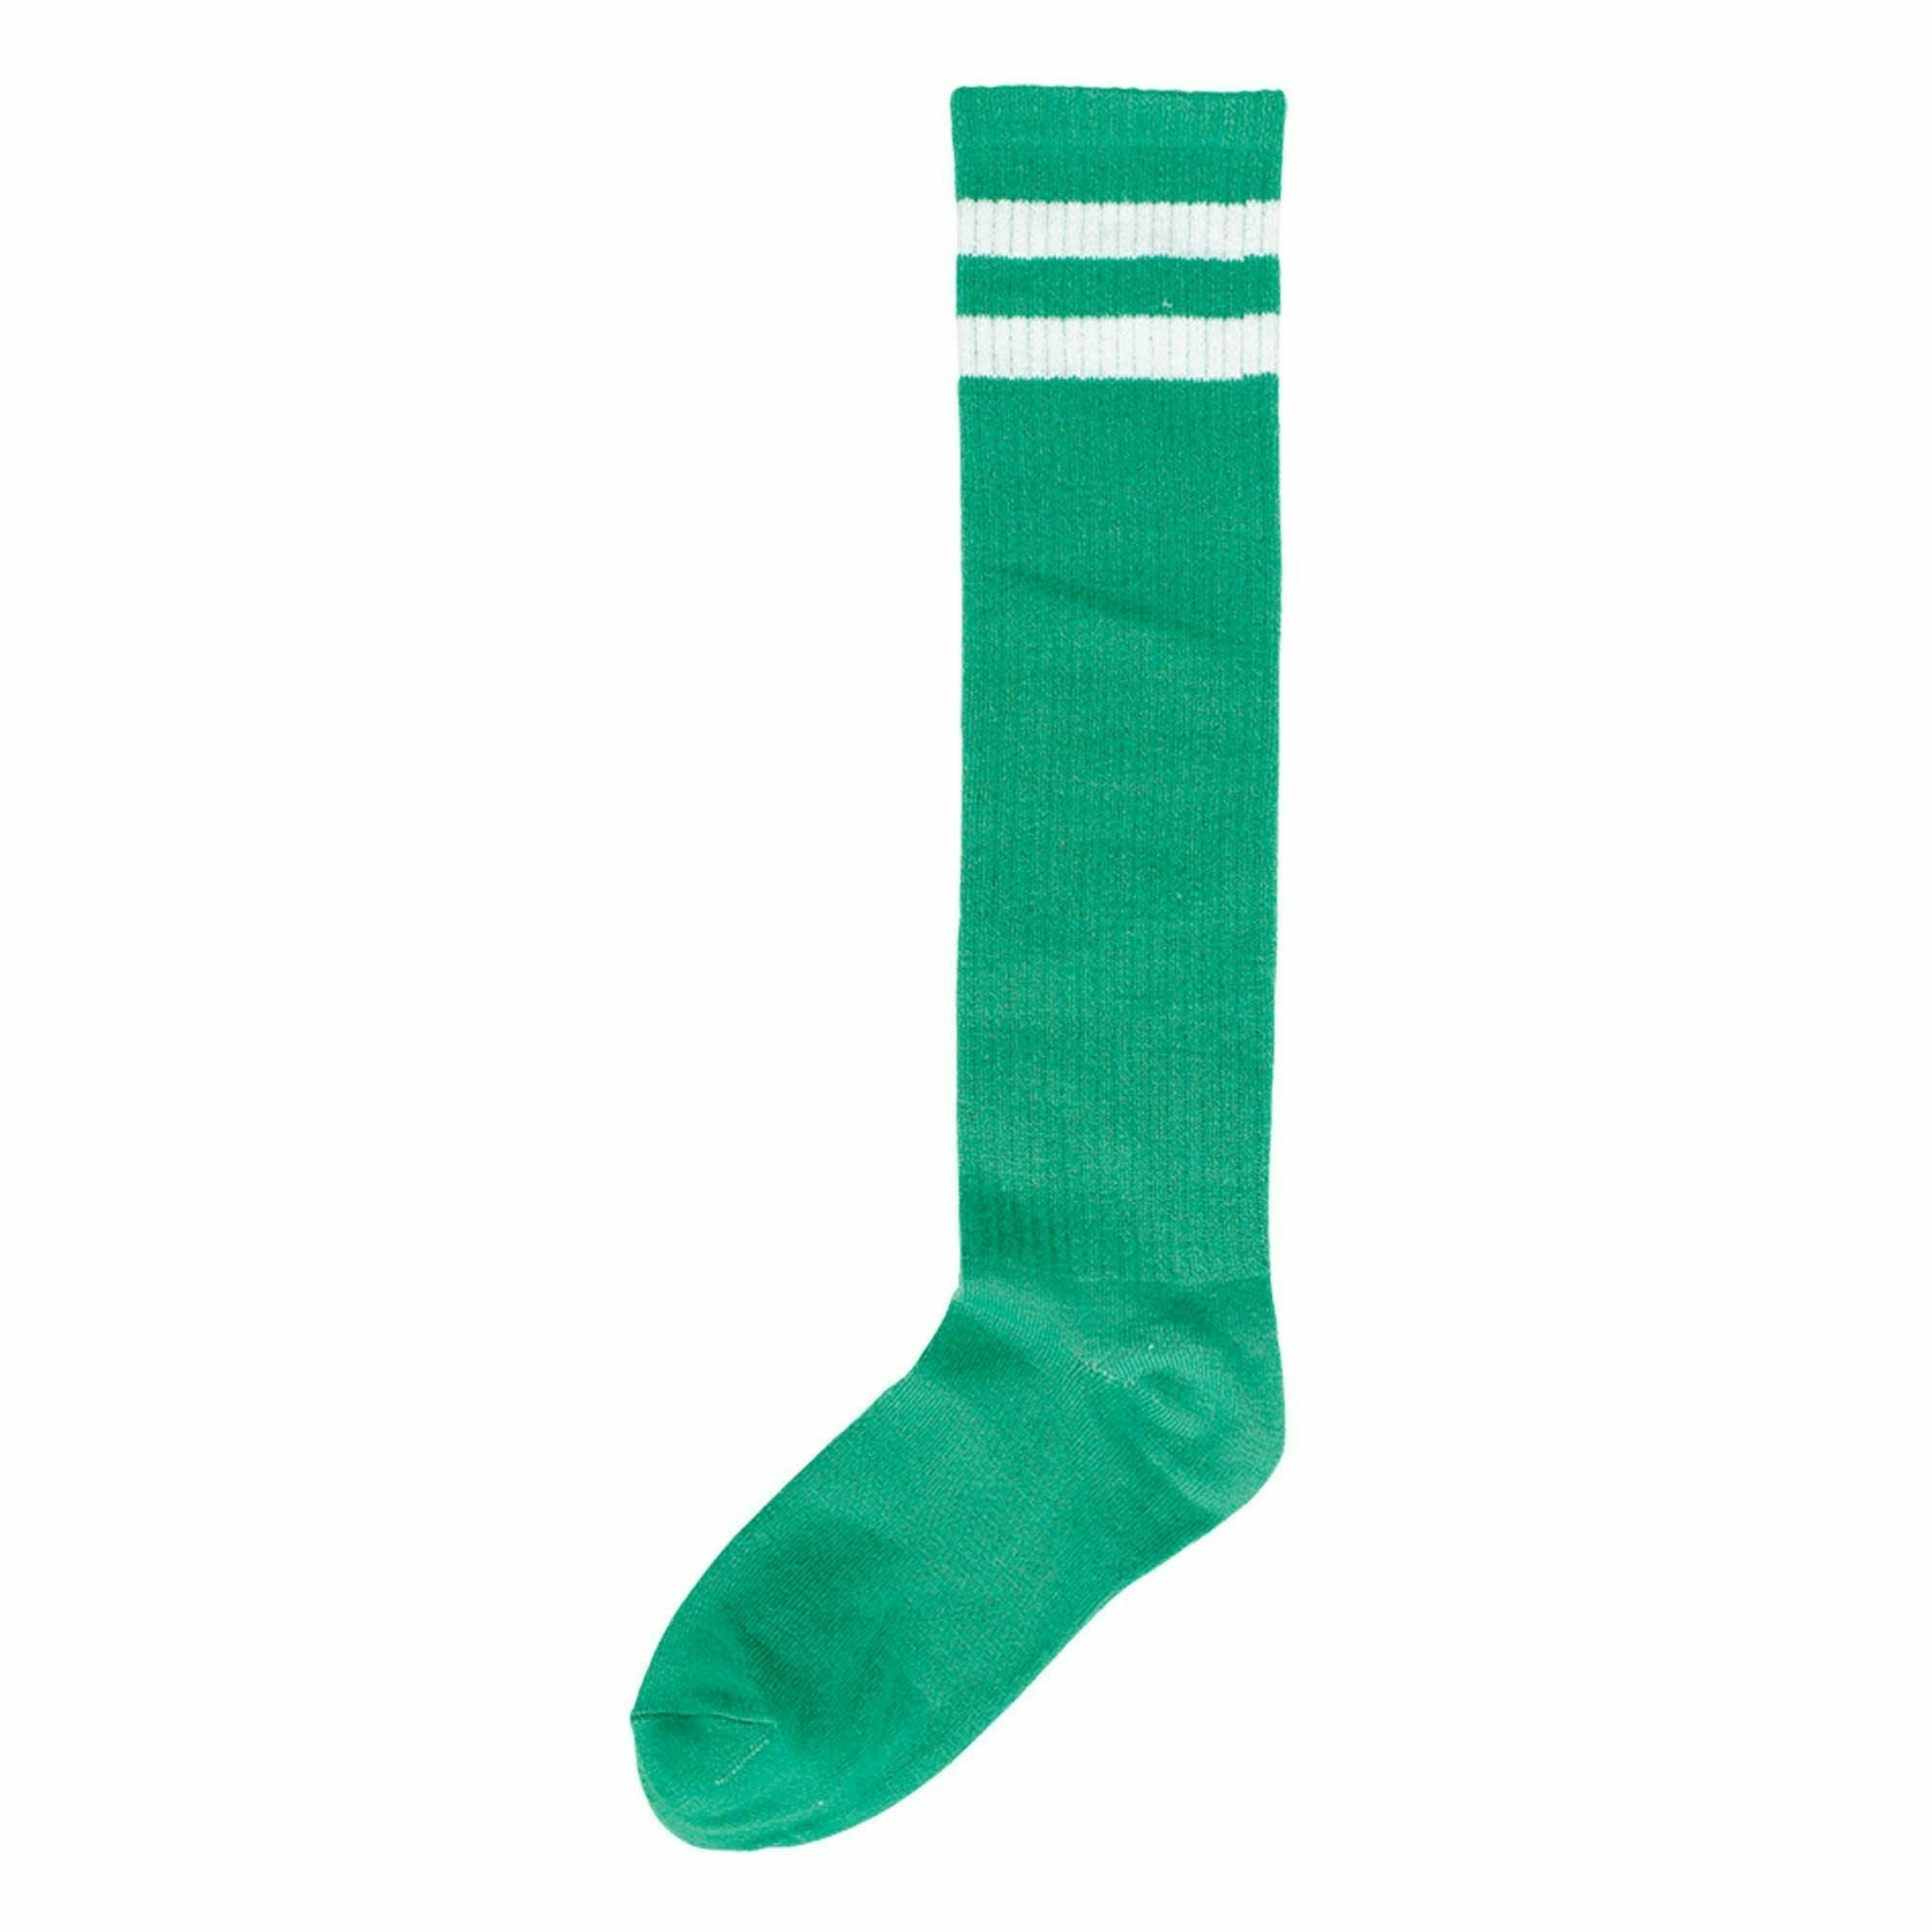 Green Stripe Athletic Knee-High Socks 19in